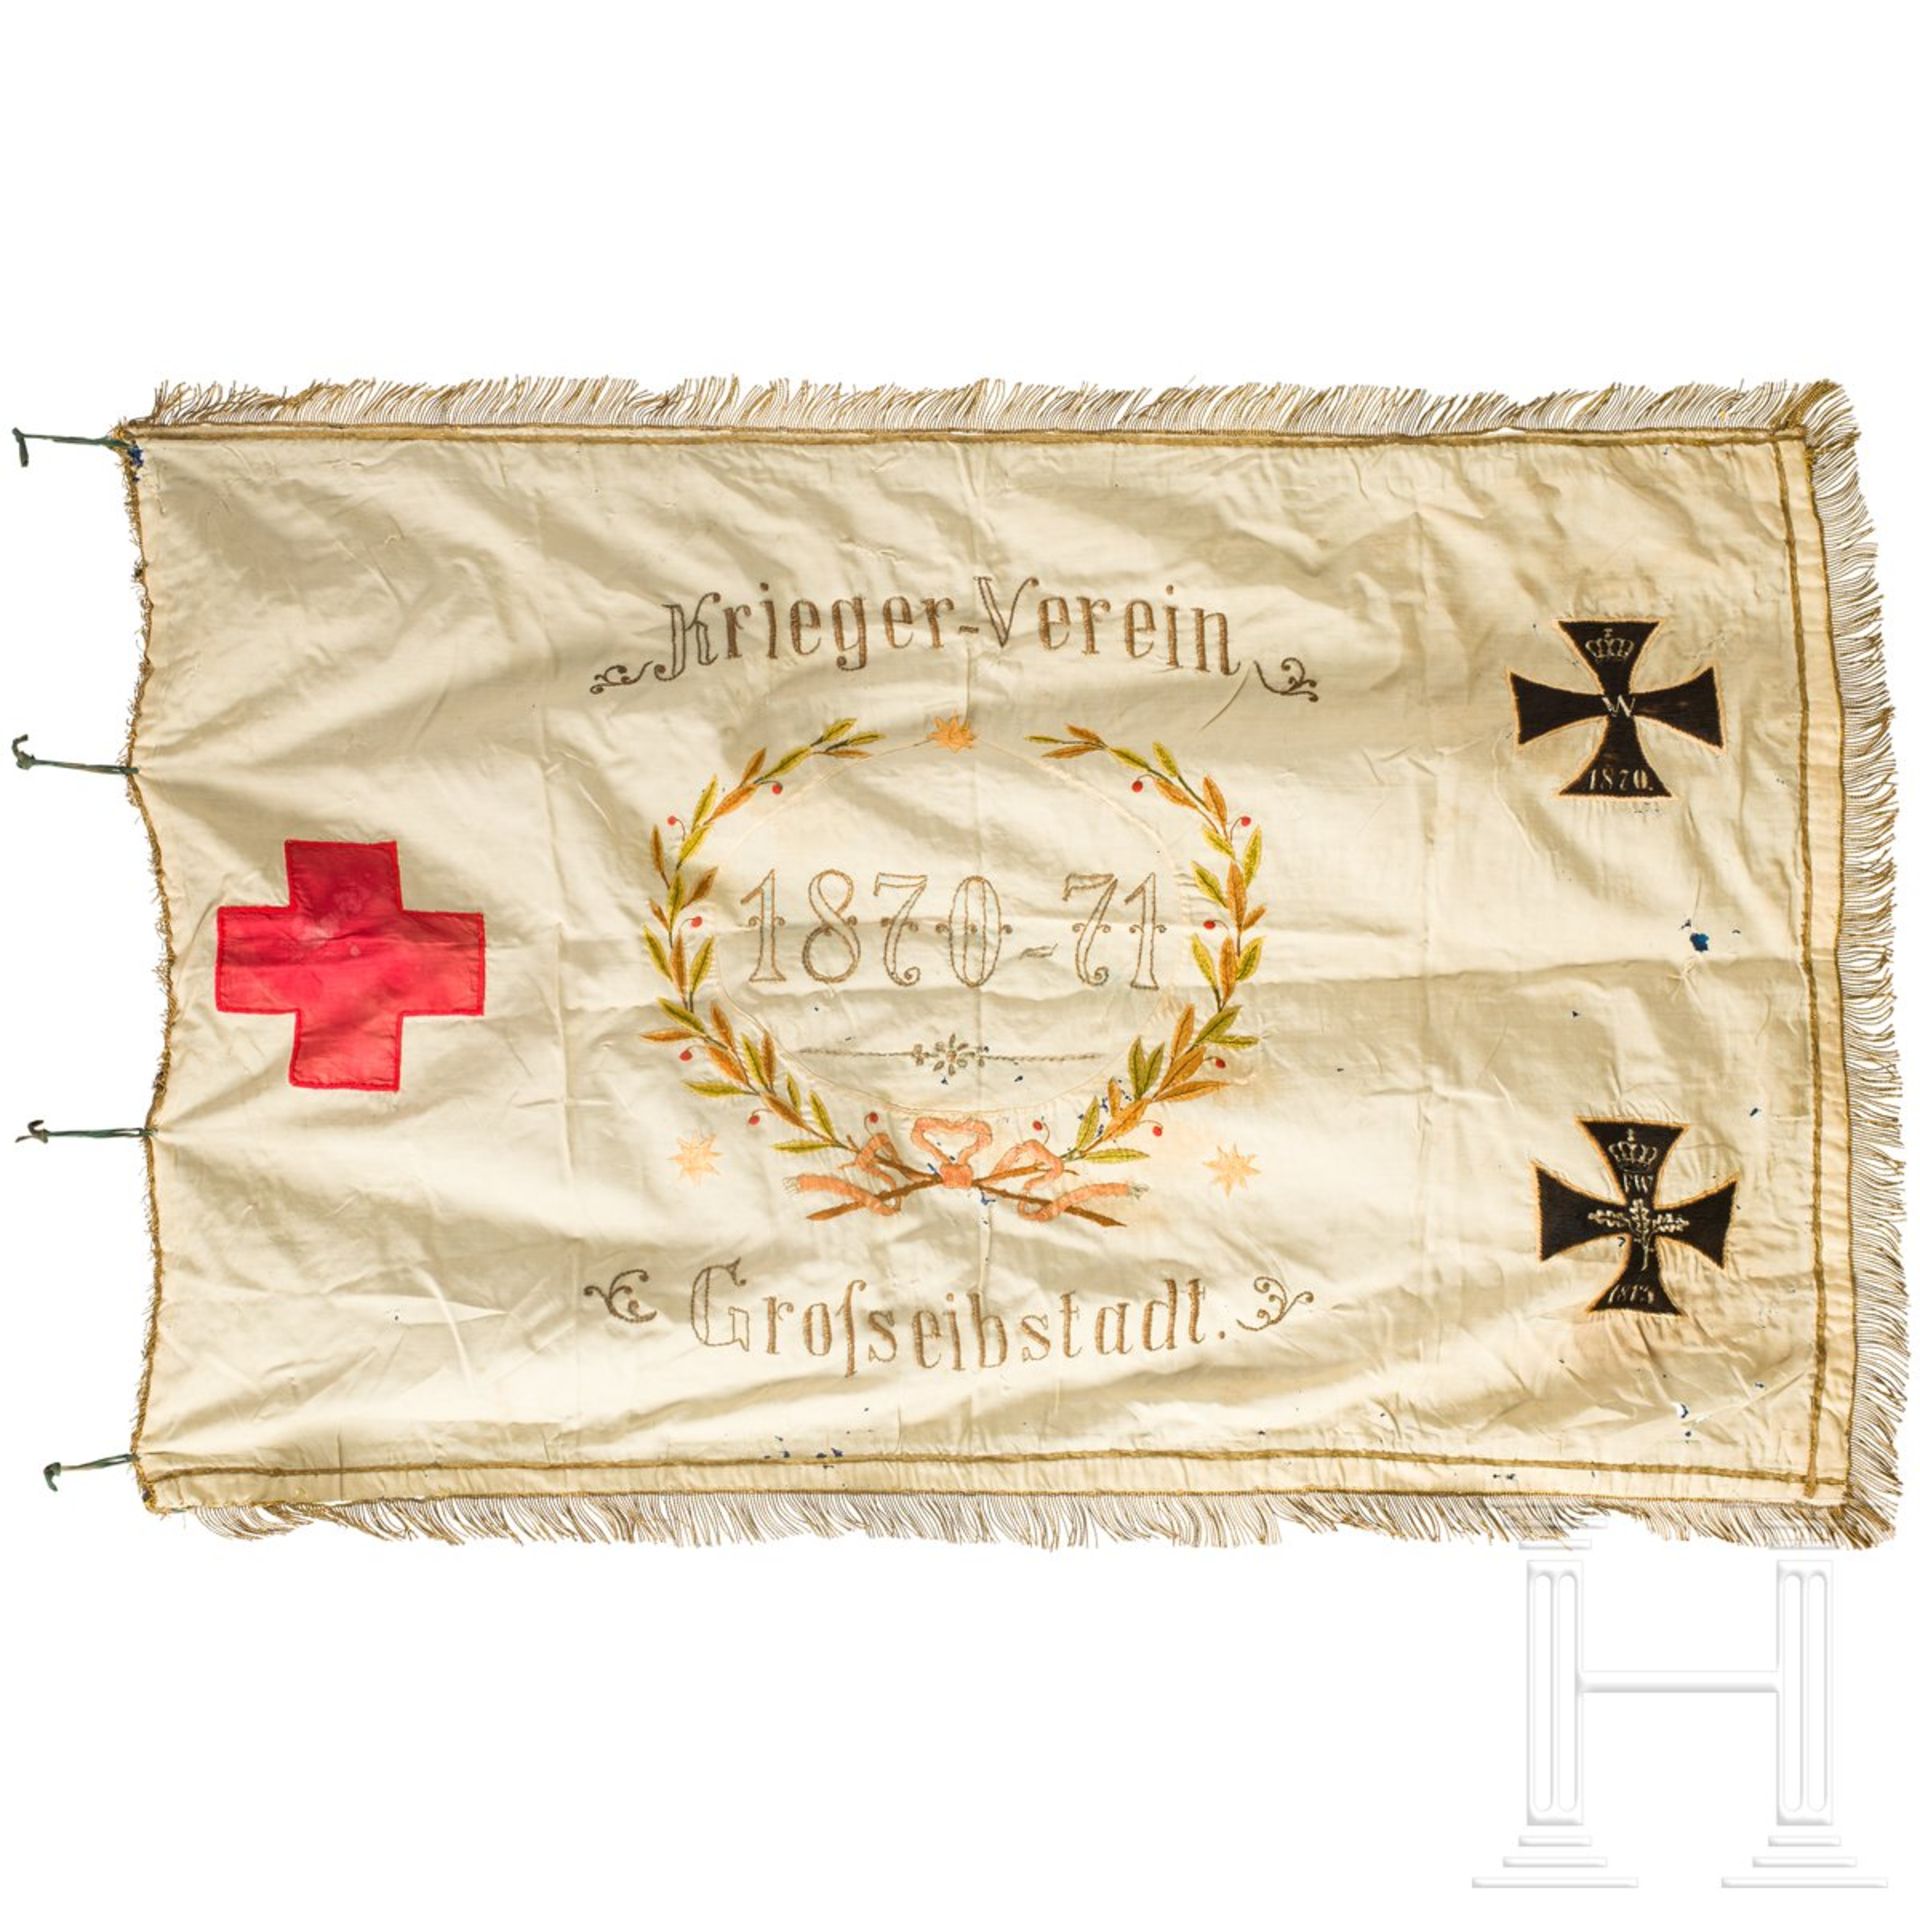 Kriegervereinsfahne Großeibstadt, datiert 1895 - Bild 2 aus 2